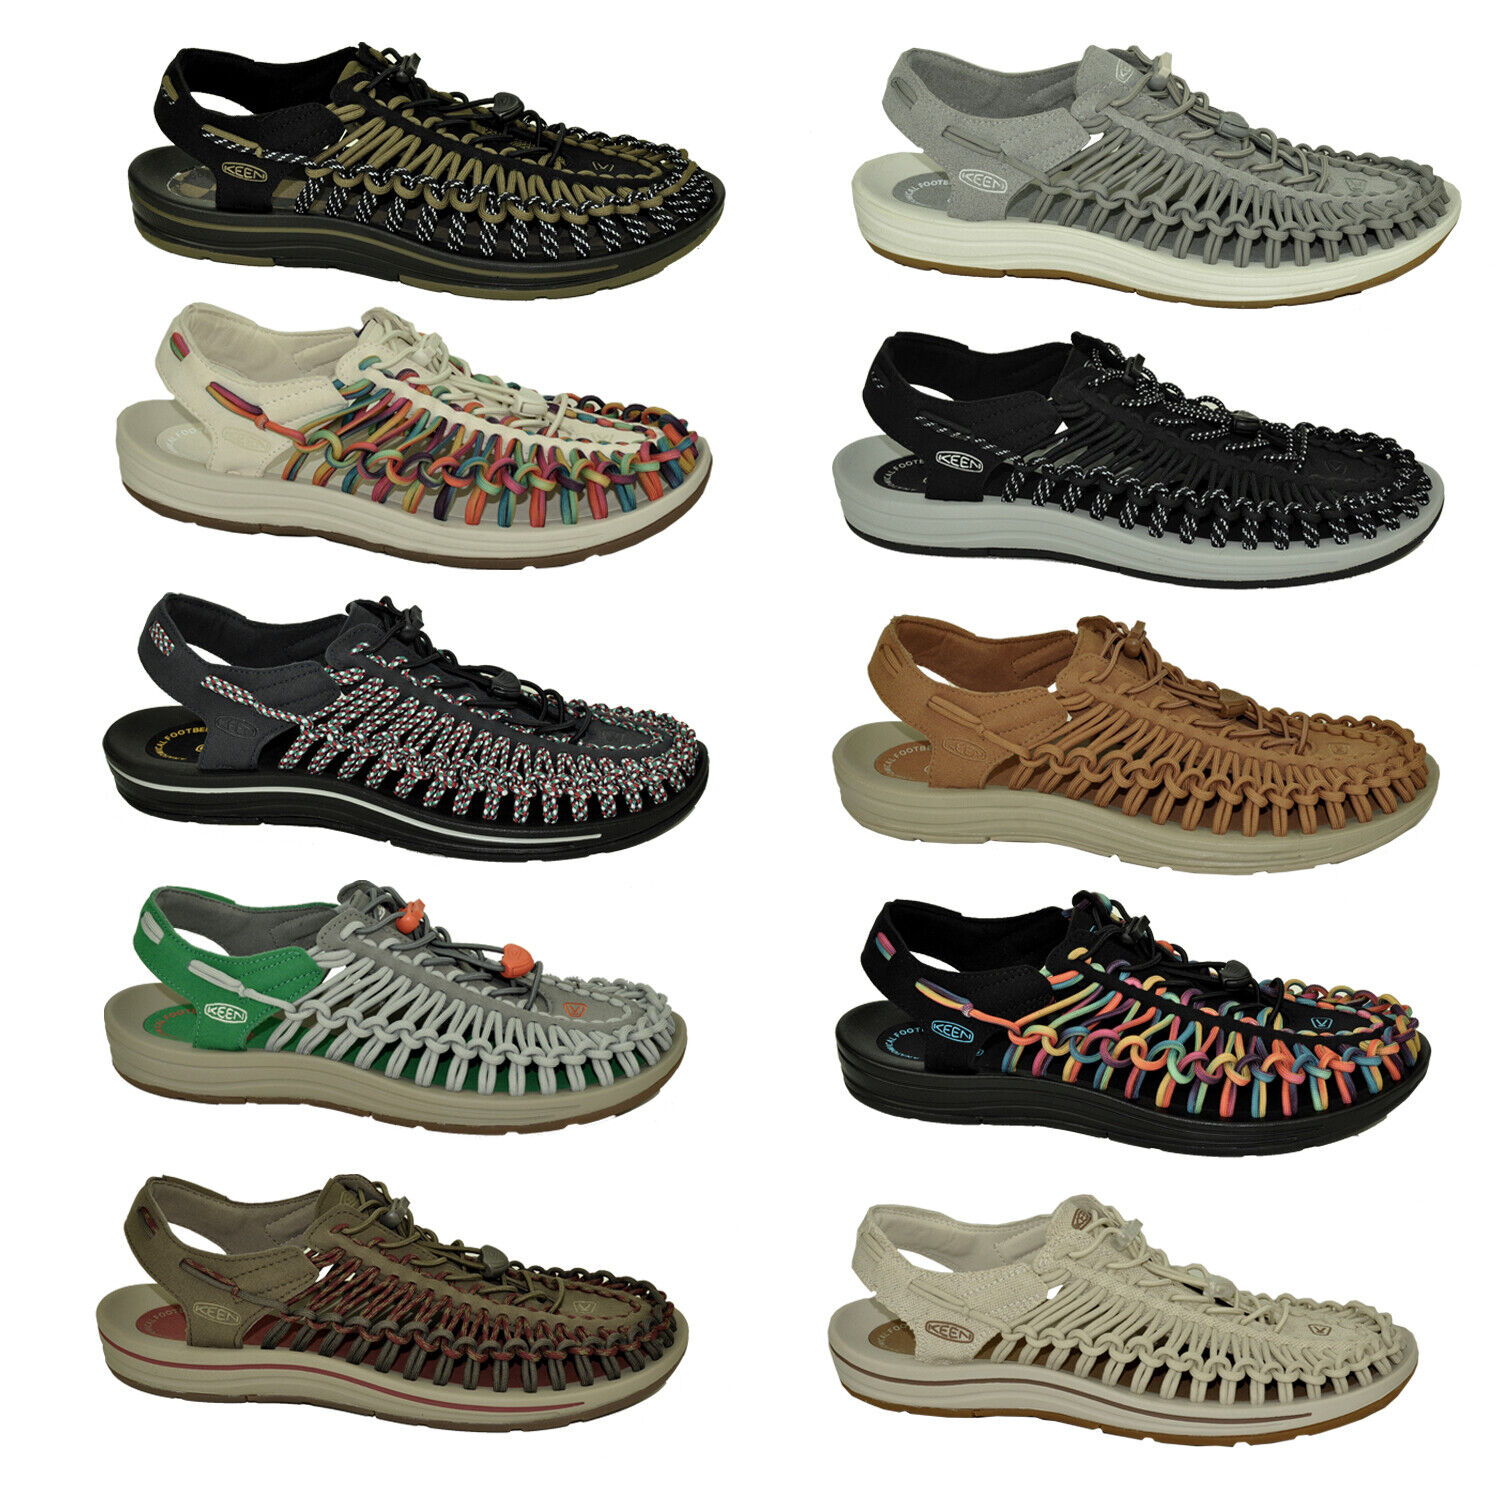 KEEN Uneek Sandalen Trekkingsandalen Ultra Leicht Leder Canvas Herren Sneaker Modell - Farbe 1025633 - Weiß/Bunt Schuhgröße EUR 47 - UK 12 - US 13